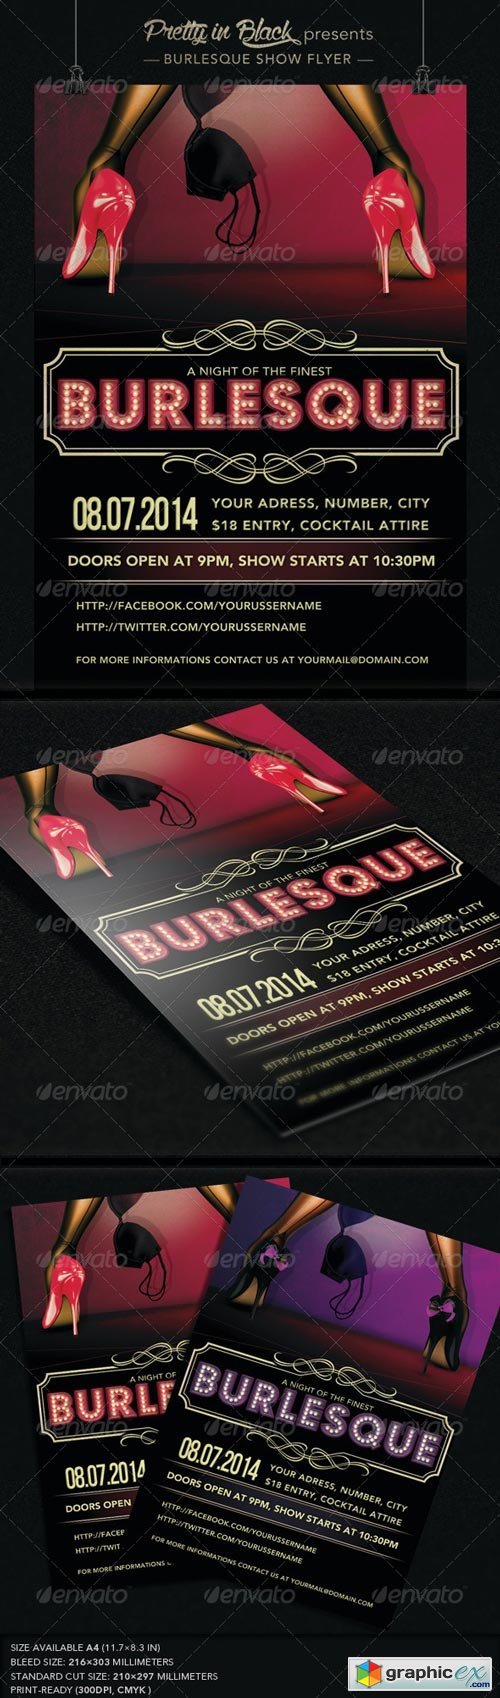 Burlesque Show Flyer/Poster Vol. 2